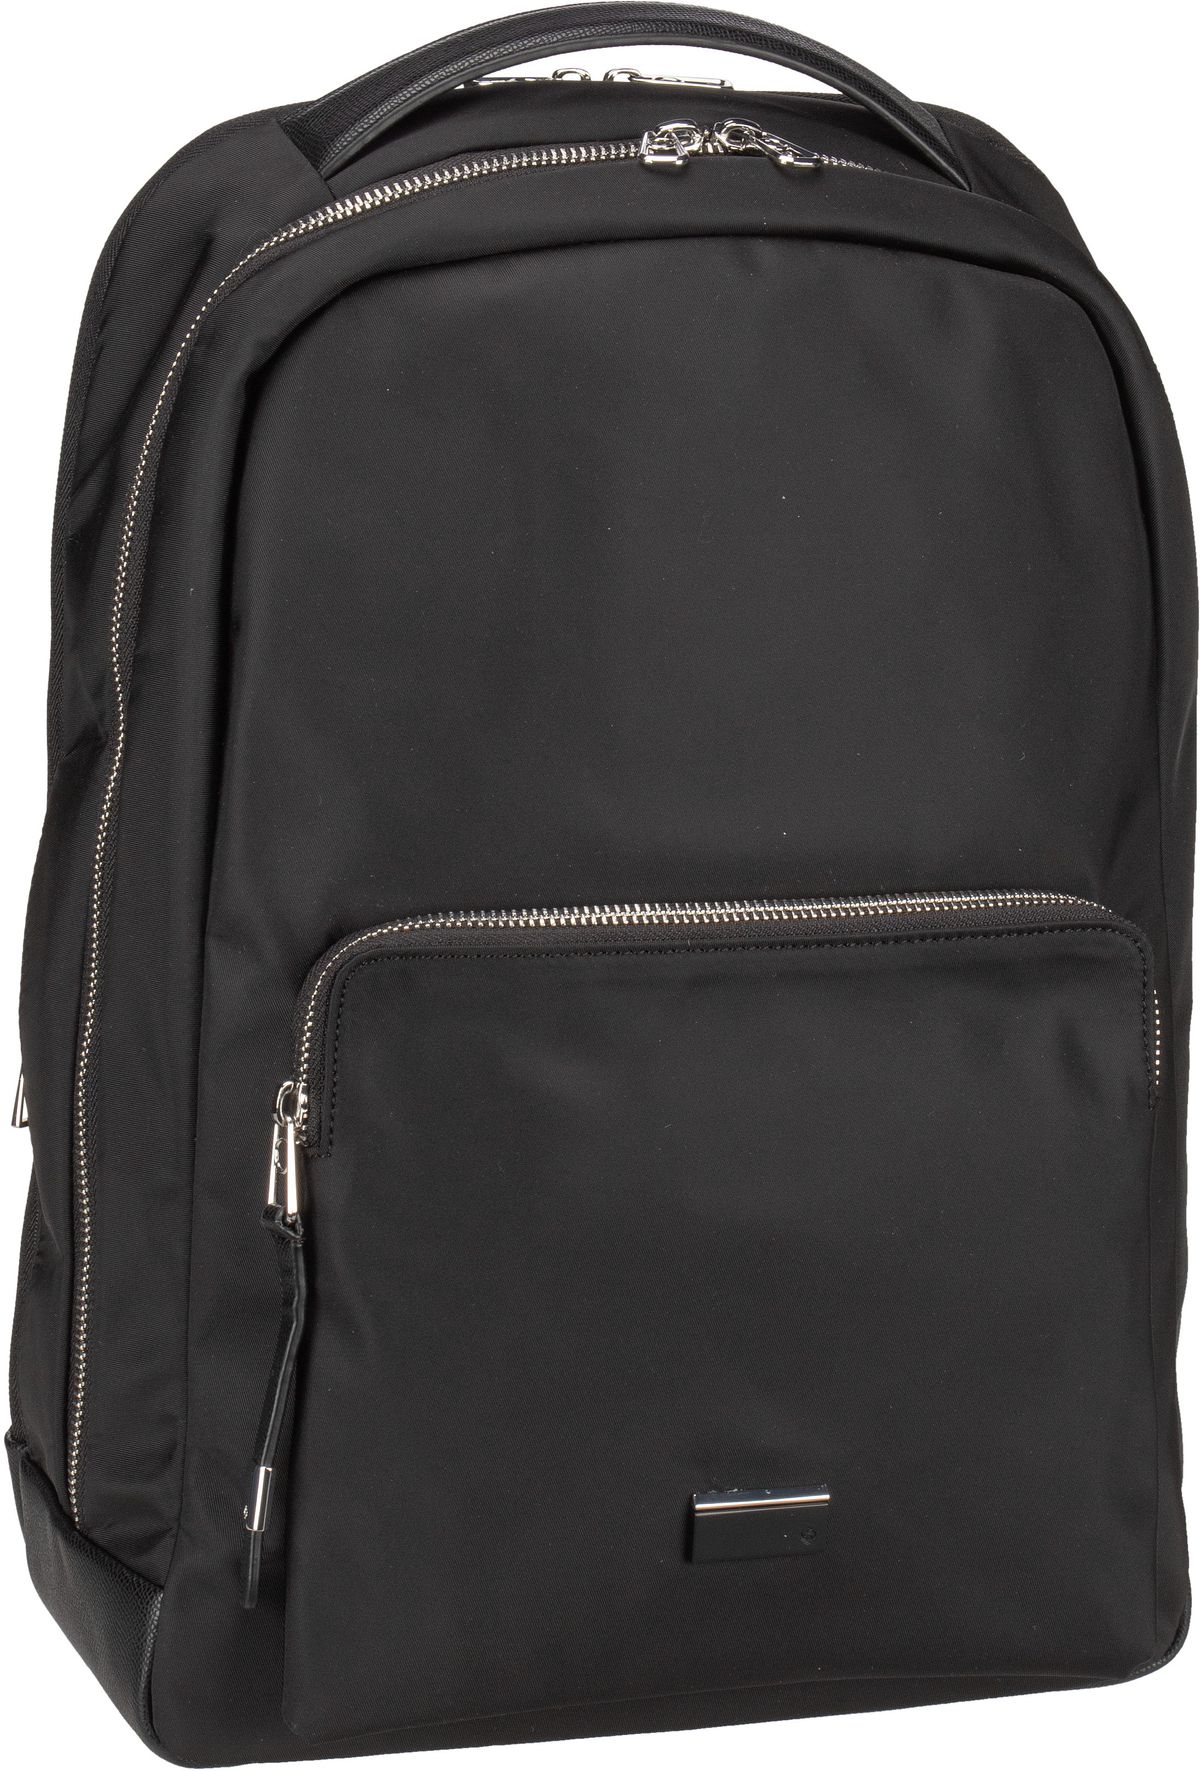 Samsonite Be-Her Backpack 15.6'' - Black